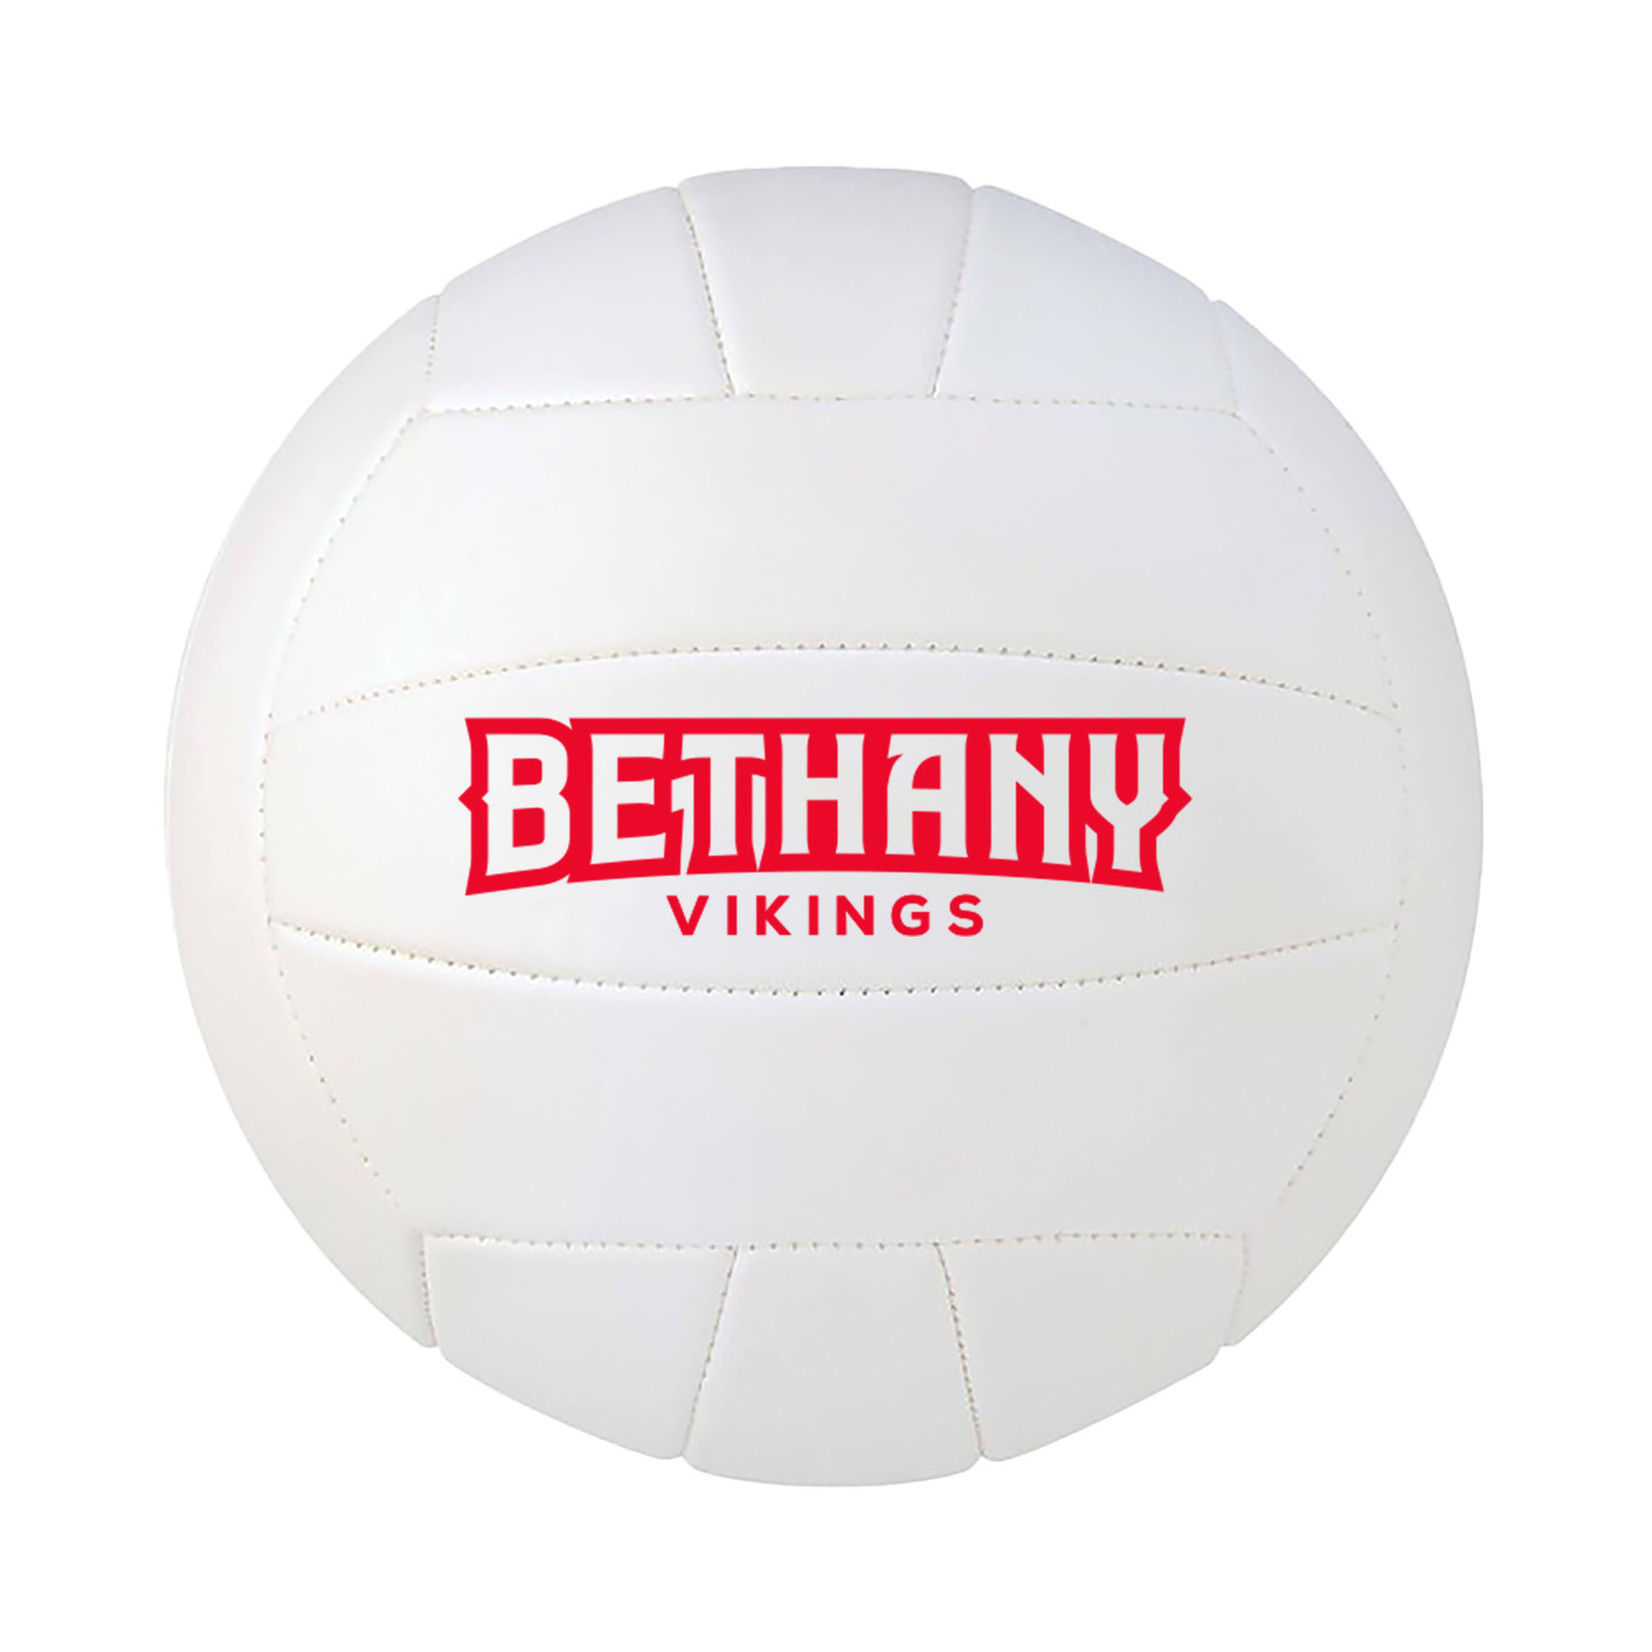 Bethany Vikings Volleyball